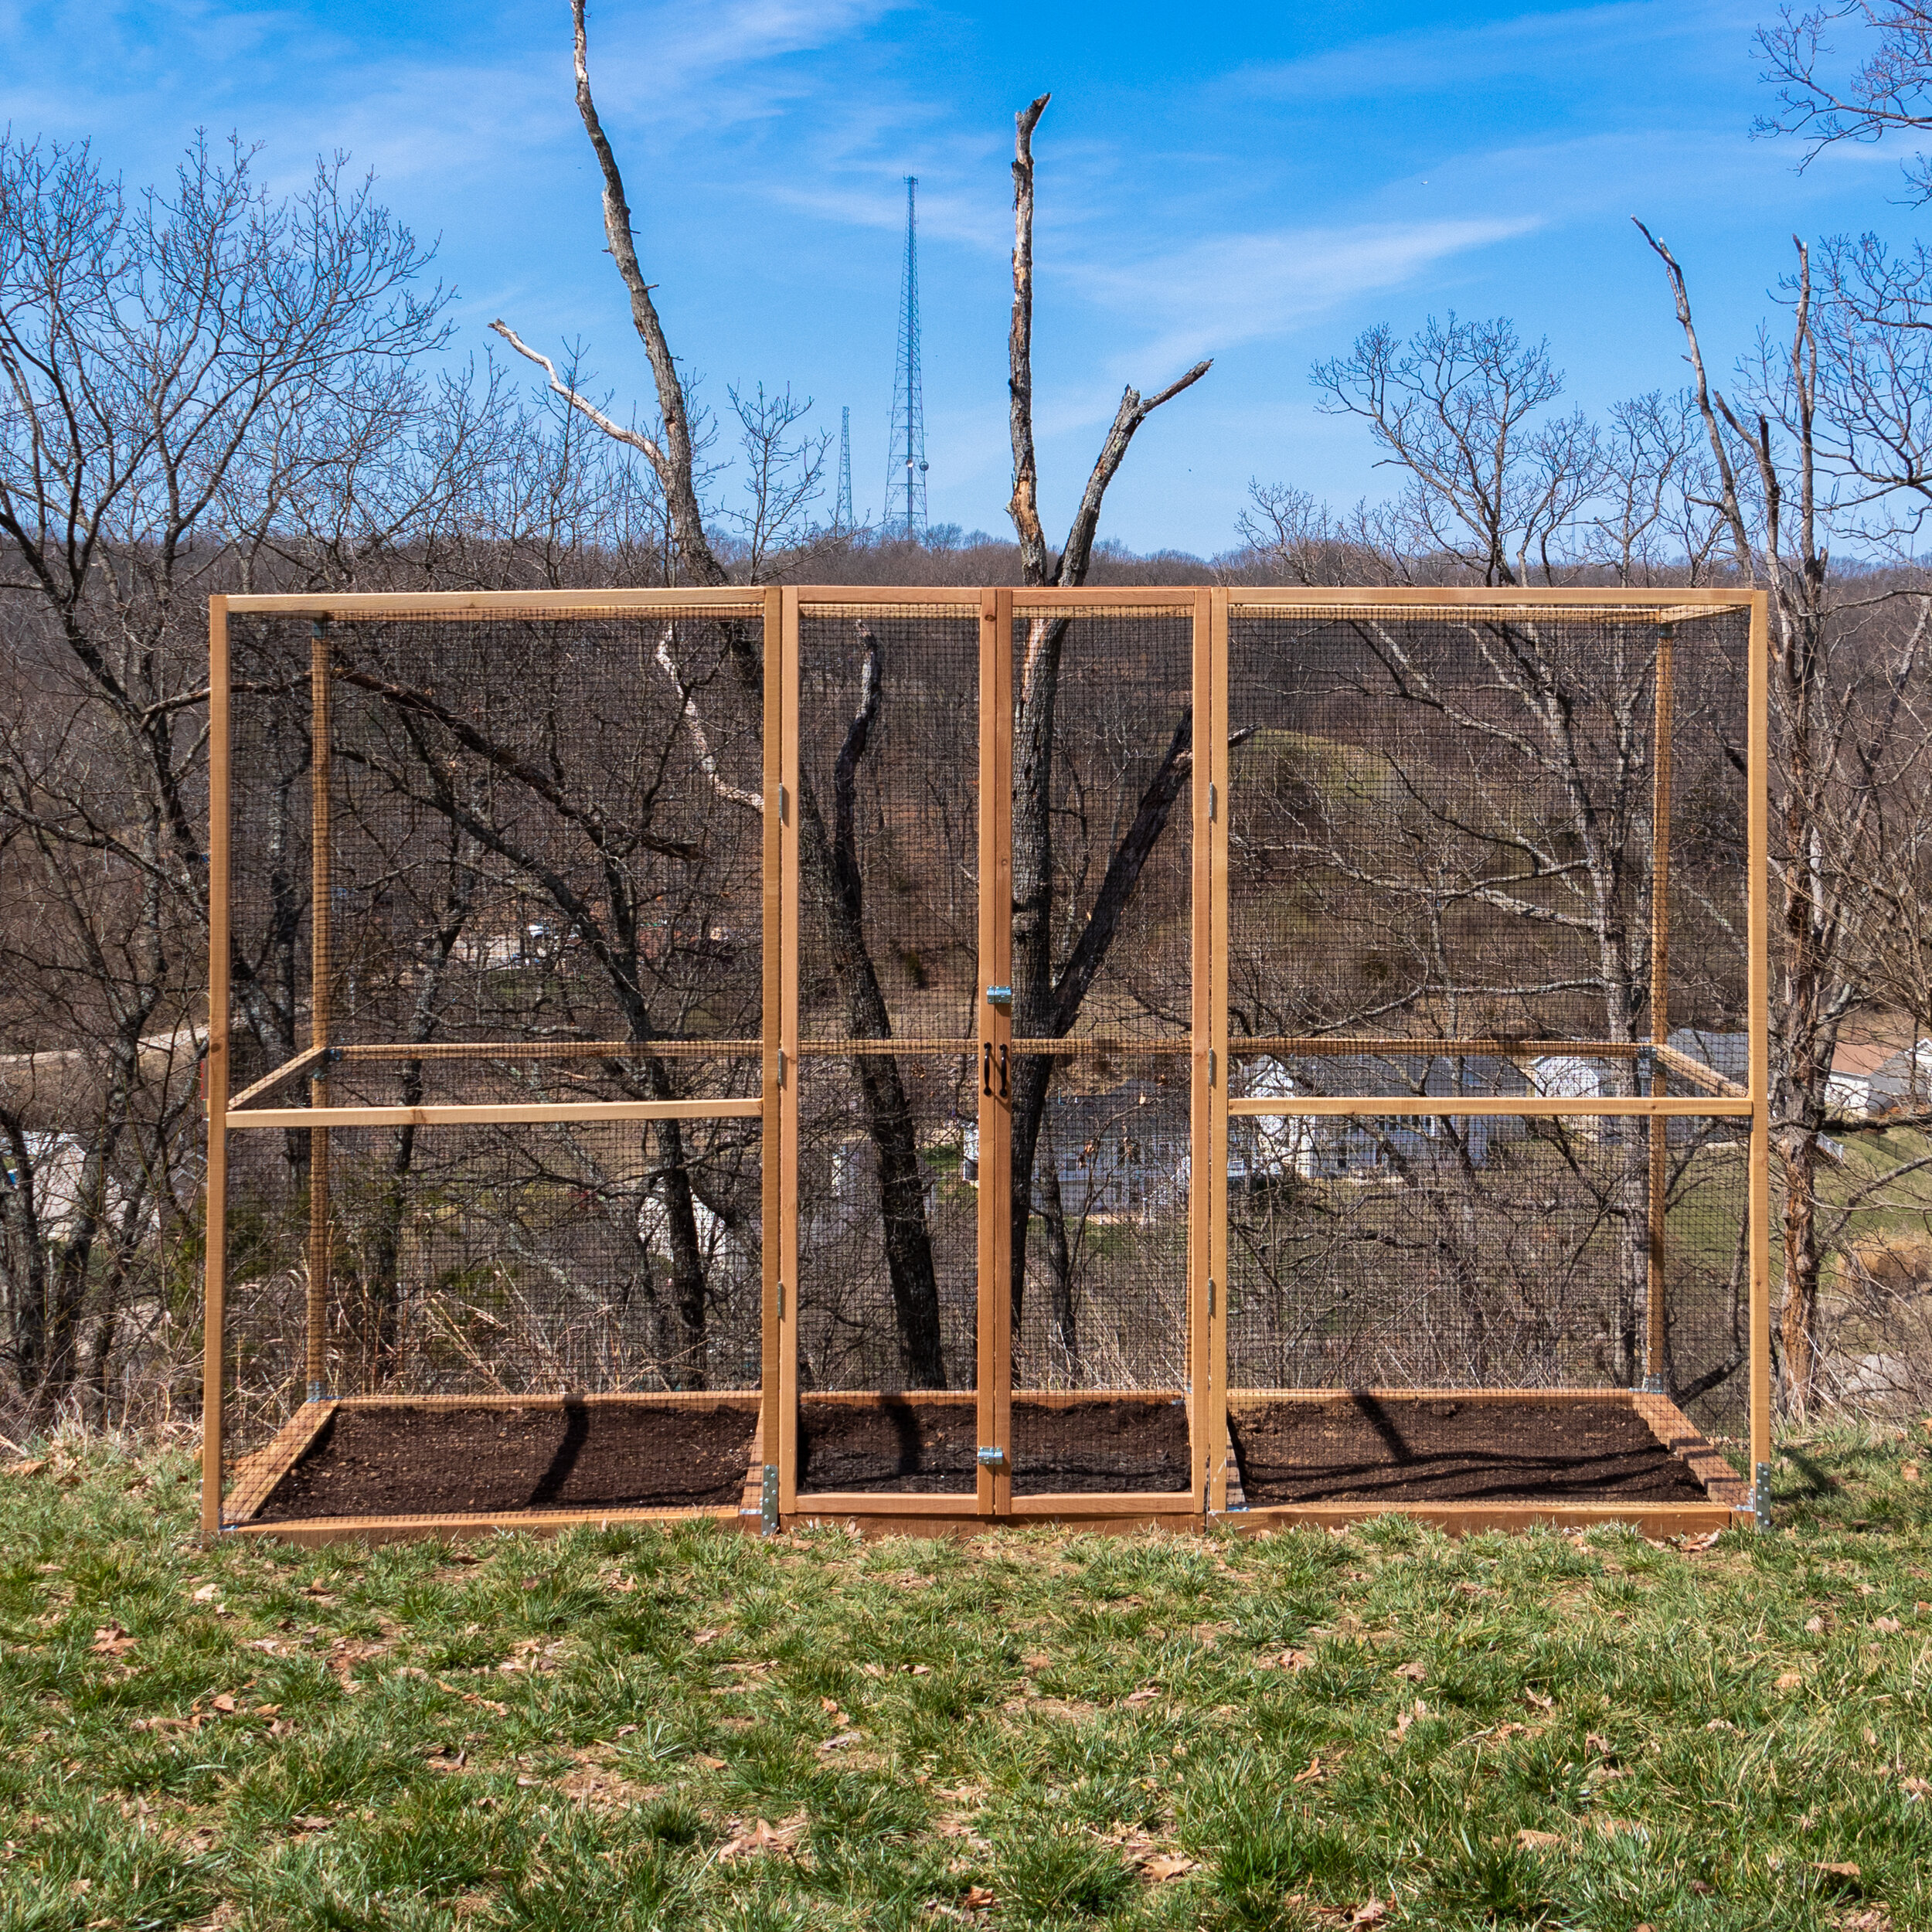 How to Build a Deer Proof Garden (Fence Design)